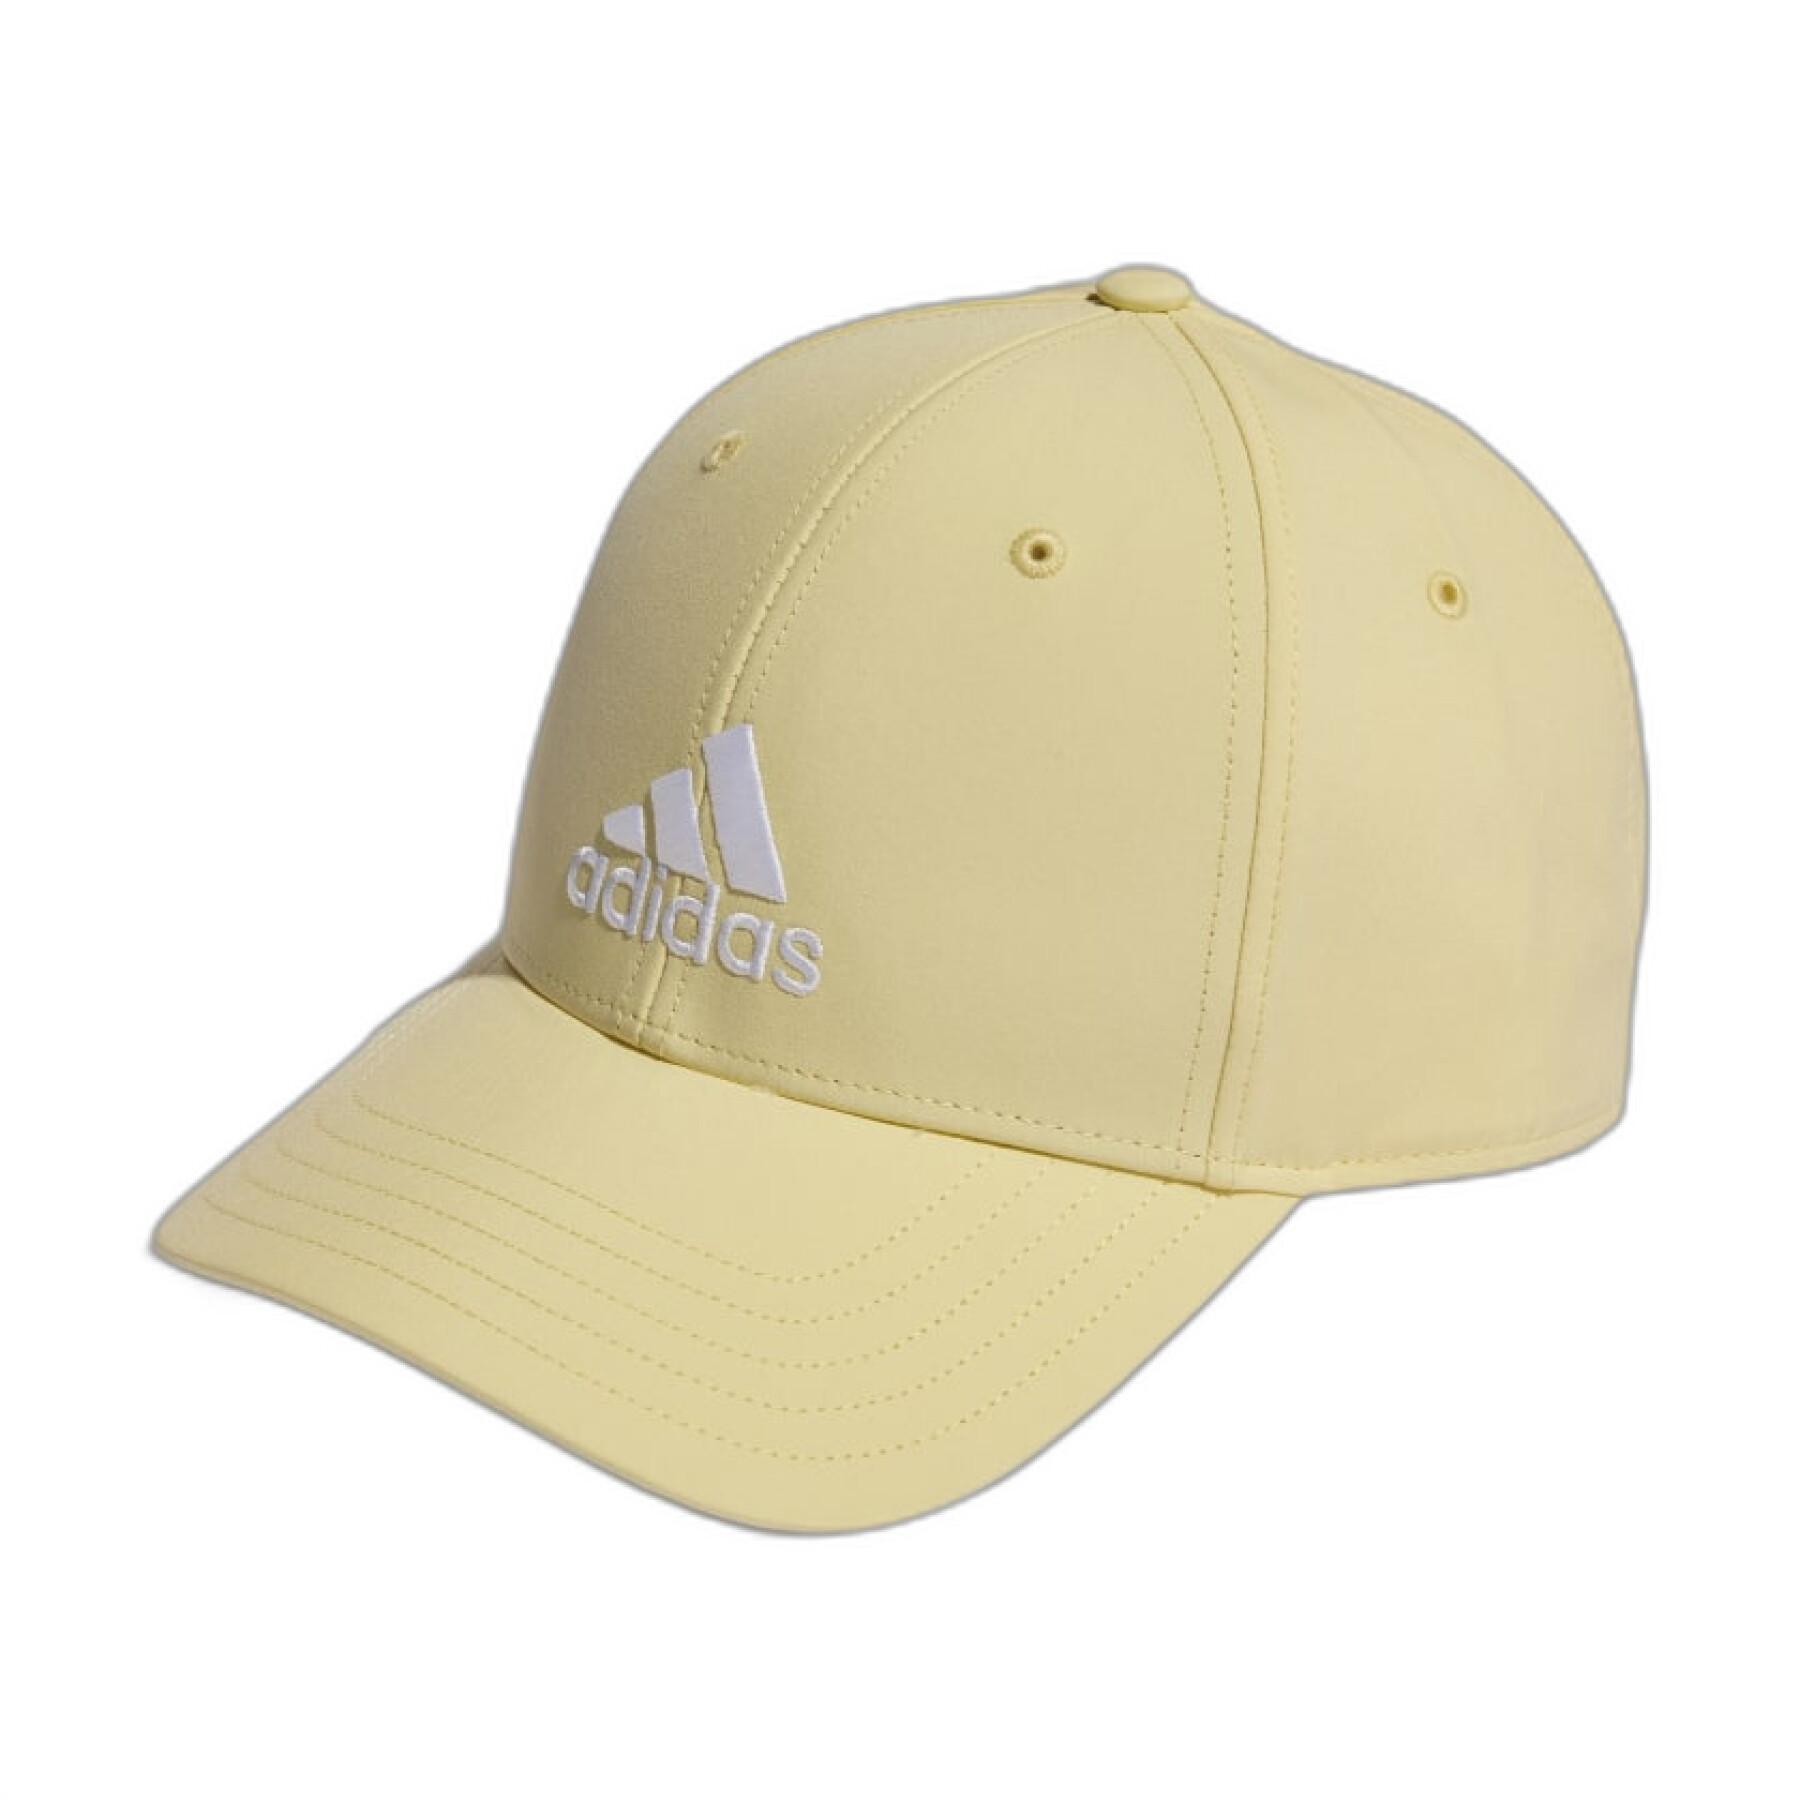 Lightweight embroidered baseball cap adidas